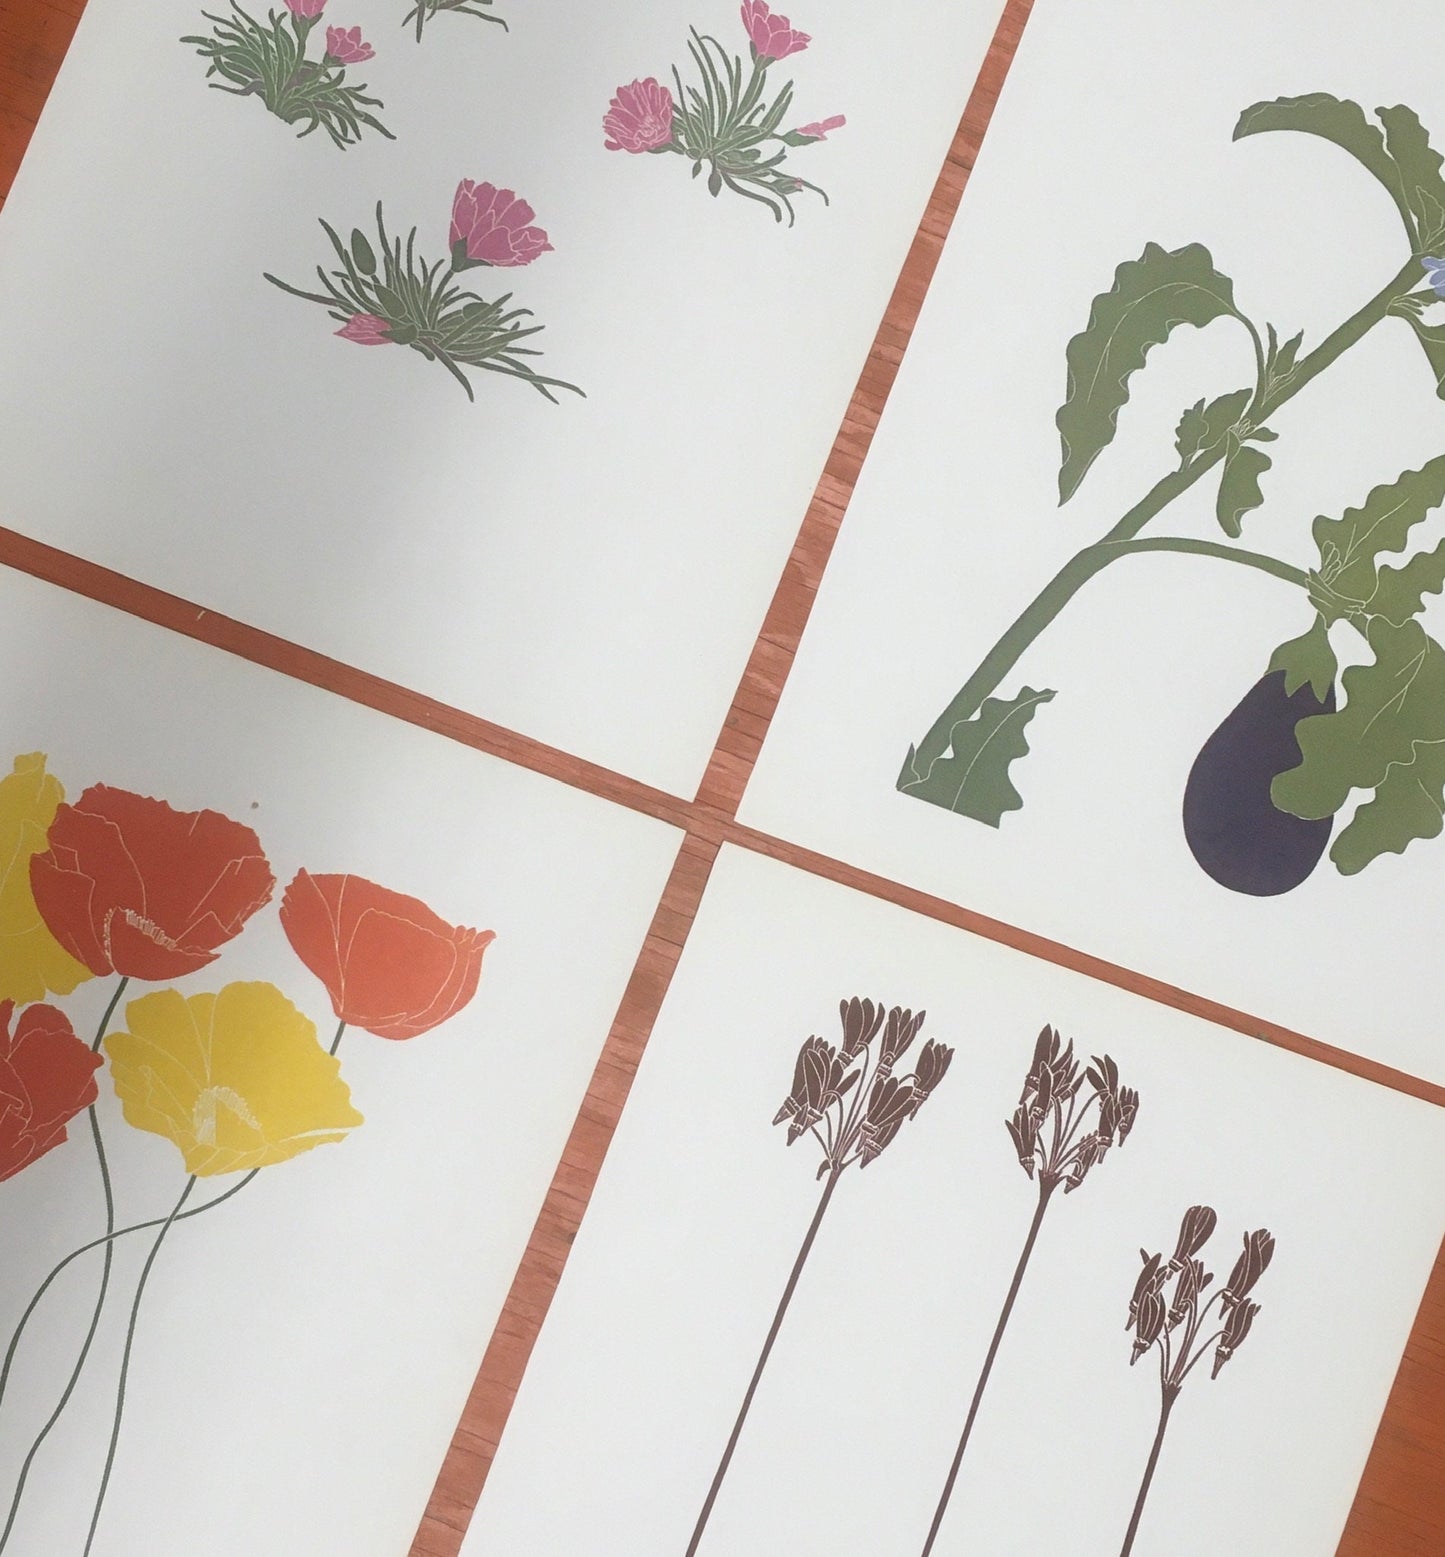 Four vintage botanical bookplates